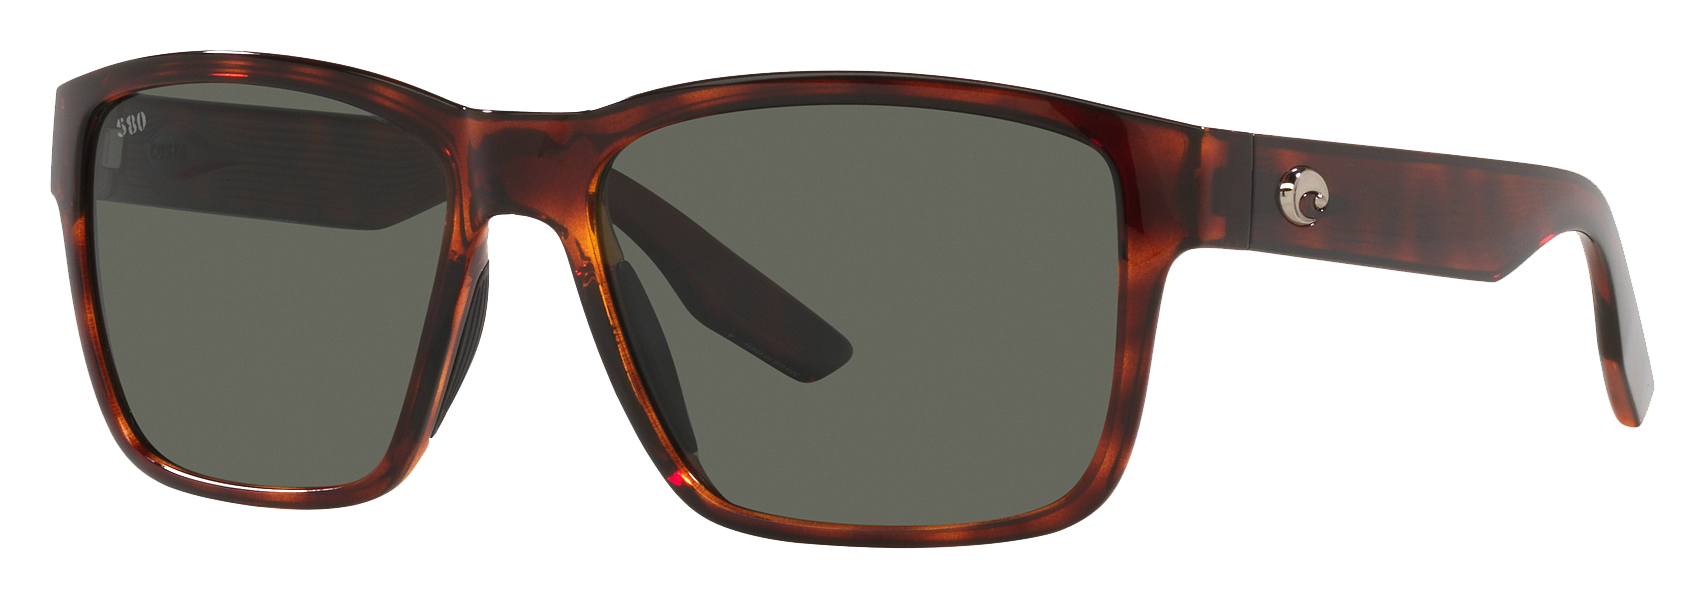 Costa Del Mar Paunch 580G Glass Polarized Sunglasses - Tortoise/Gray - Large